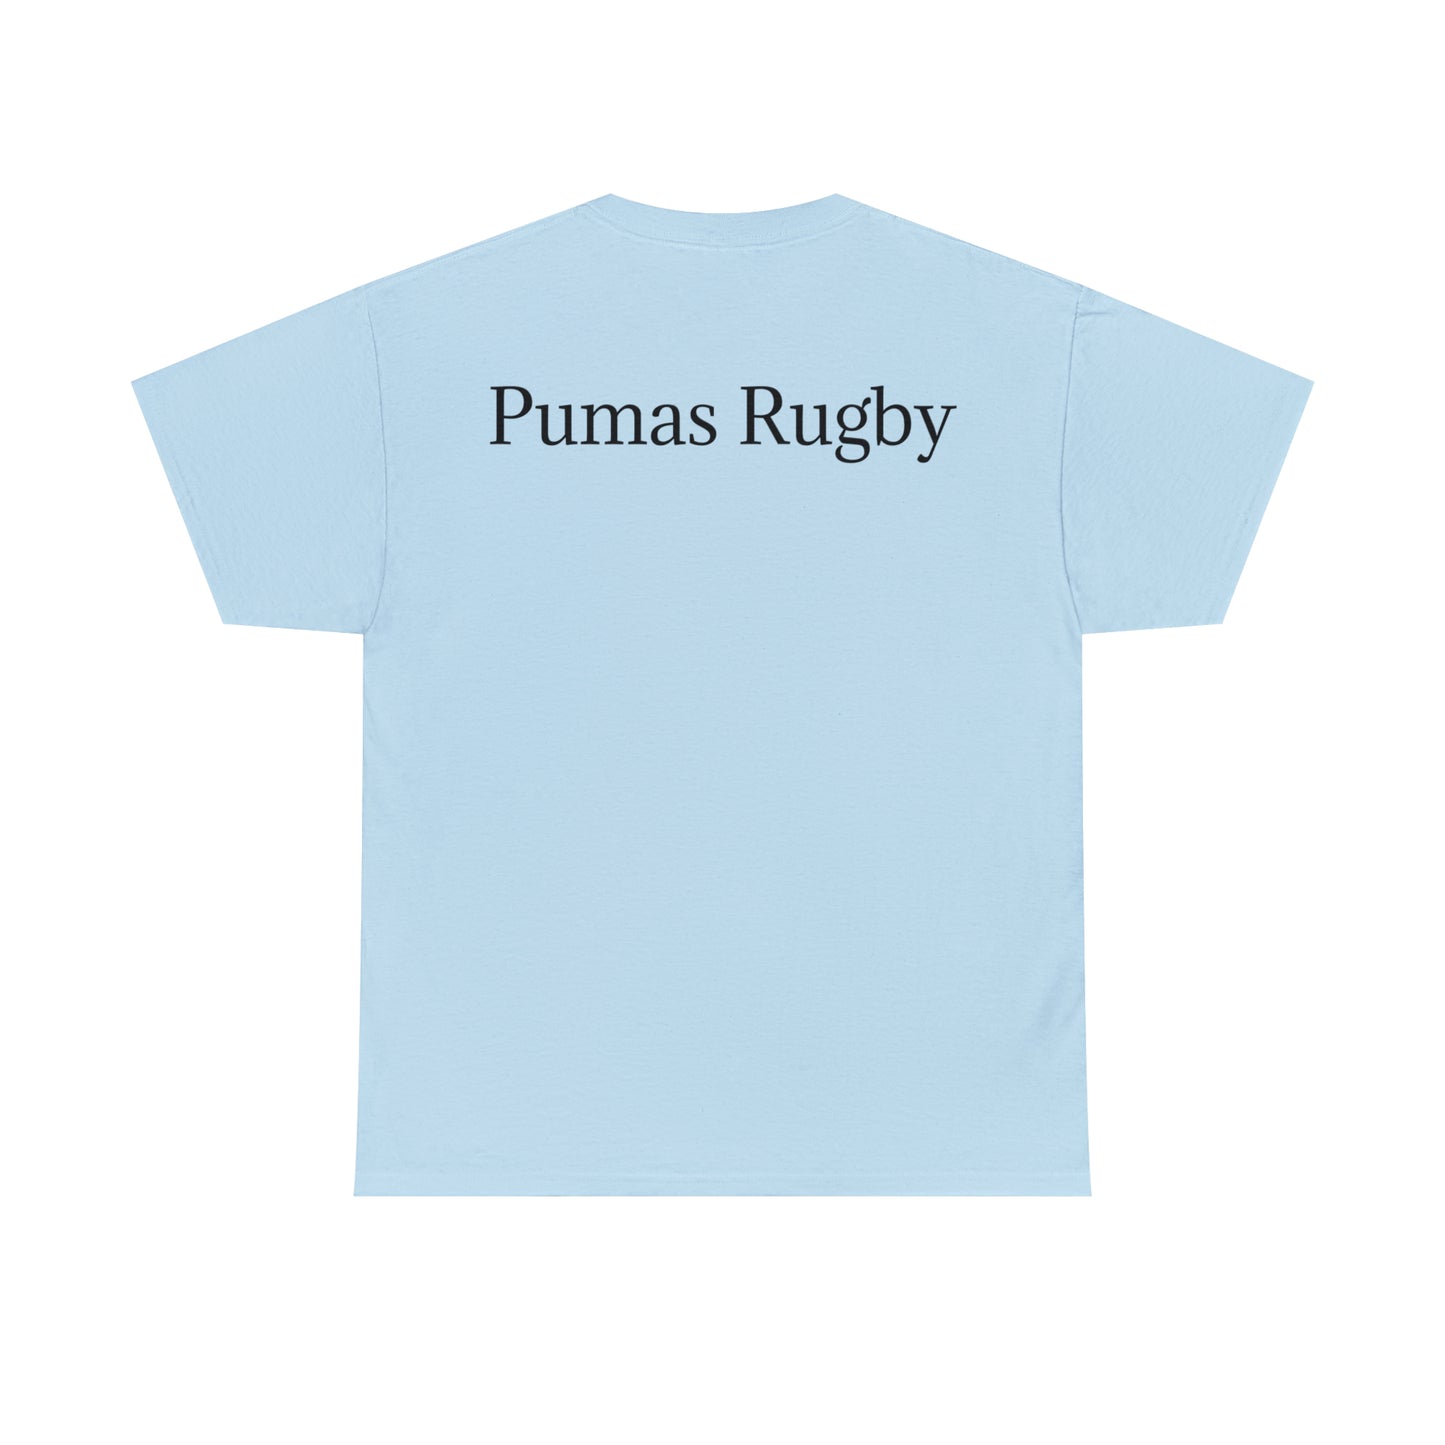 Ready Pumas - light shirts